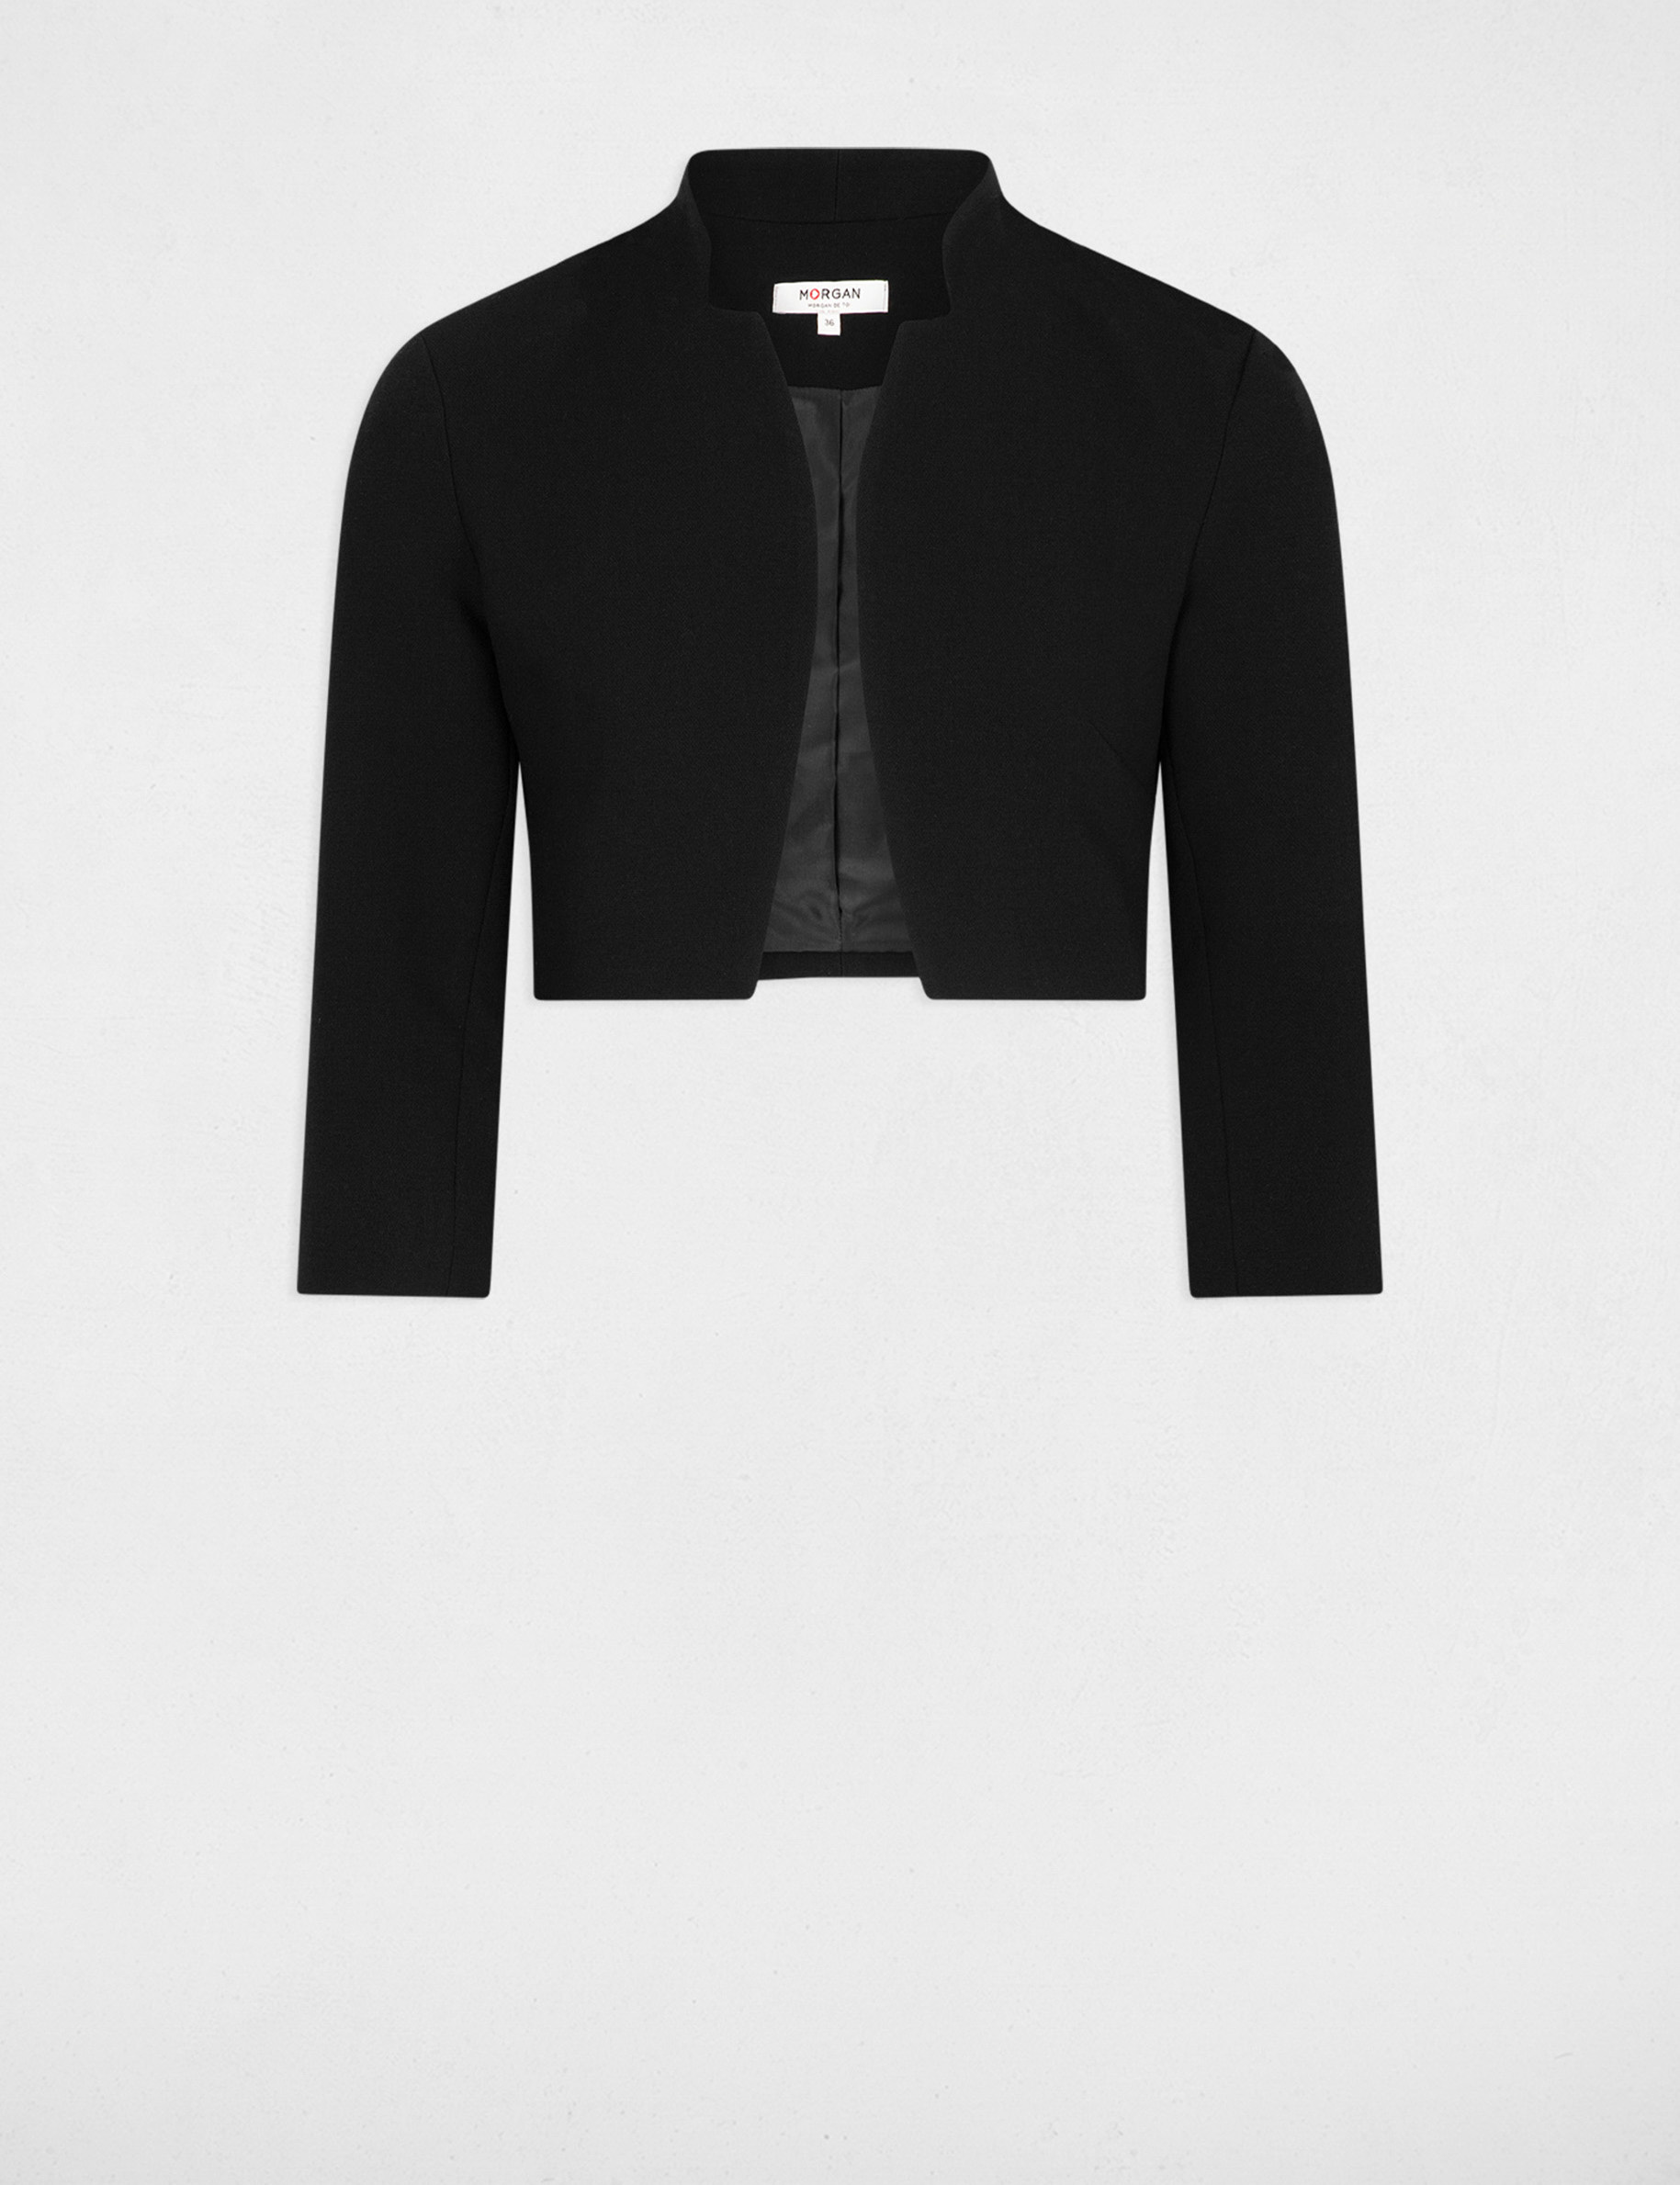 Short bolero jacket black ladies'